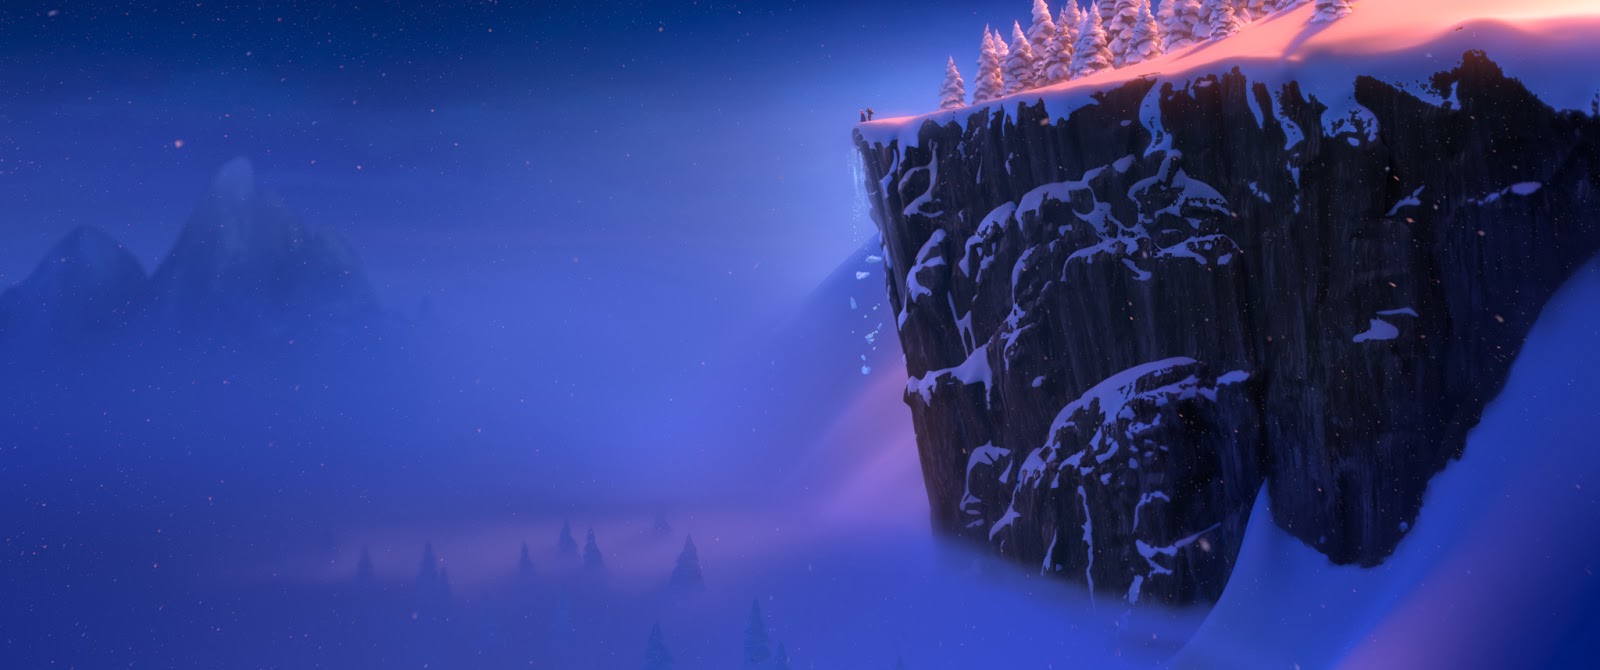 Frozen Disney movie animatedfilmreviews.filminspector.com